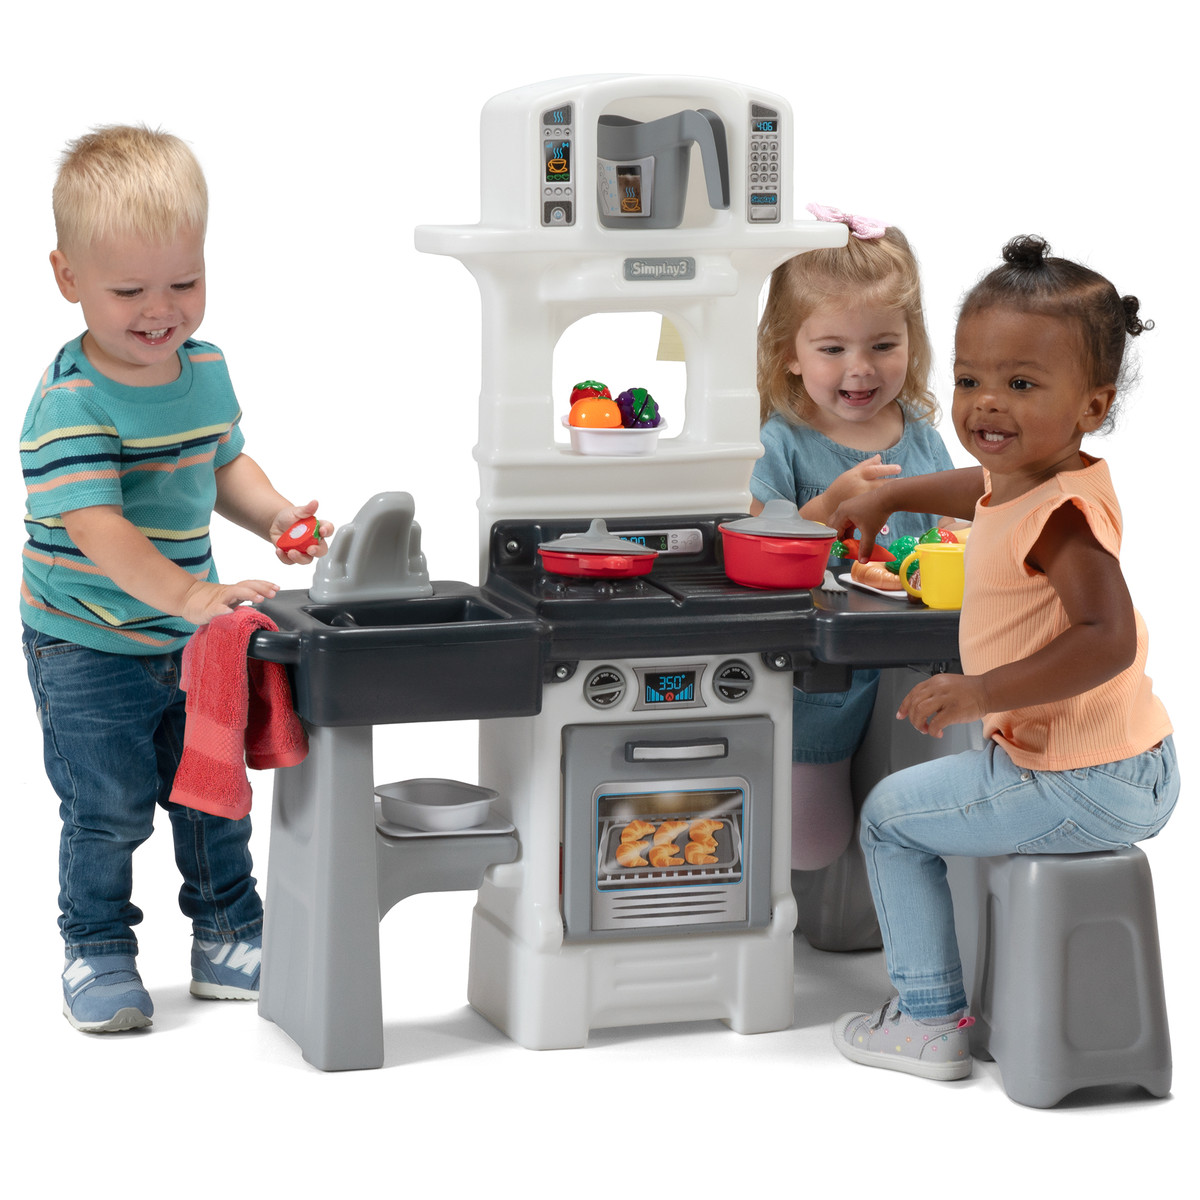 Three children playing happily around the Cooking Kids Dine-In Kitchen